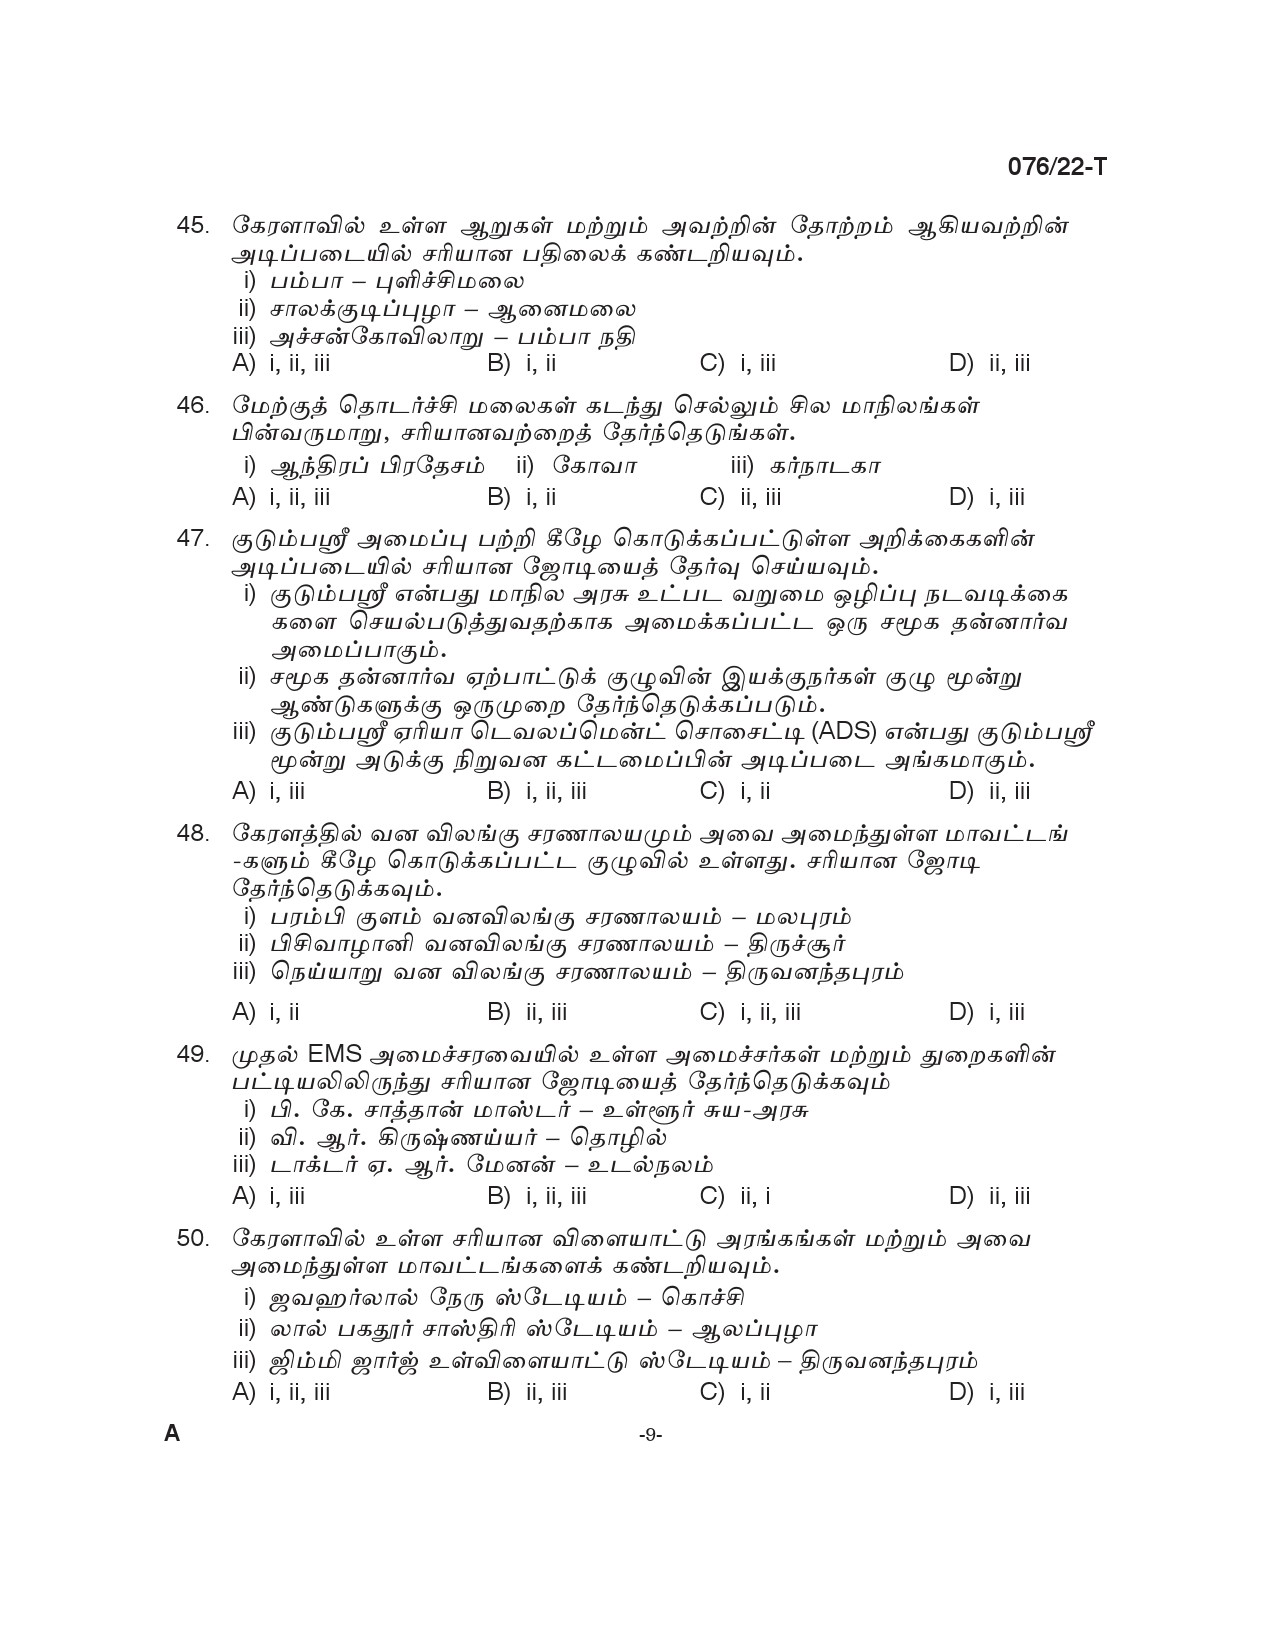 Common Preliminary Exam 2022 Upto SSLC Level Stage V Tamil 0762022 T 8